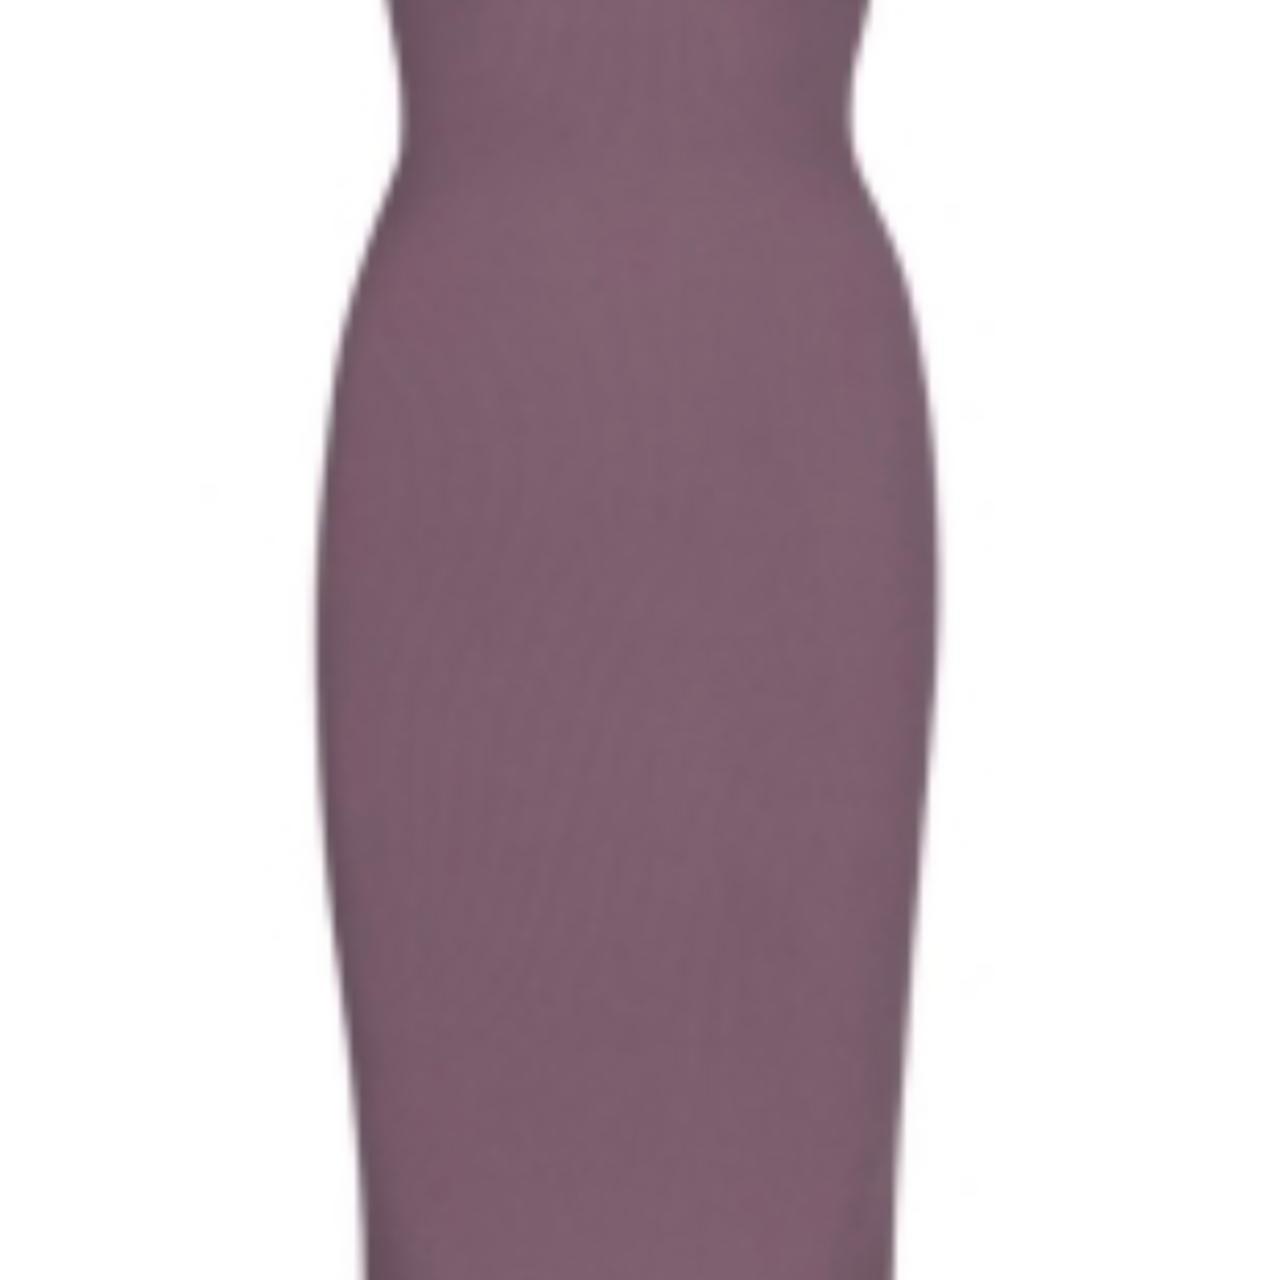 NWT Skims soft lounge dress , Size 2x (16-18), Color